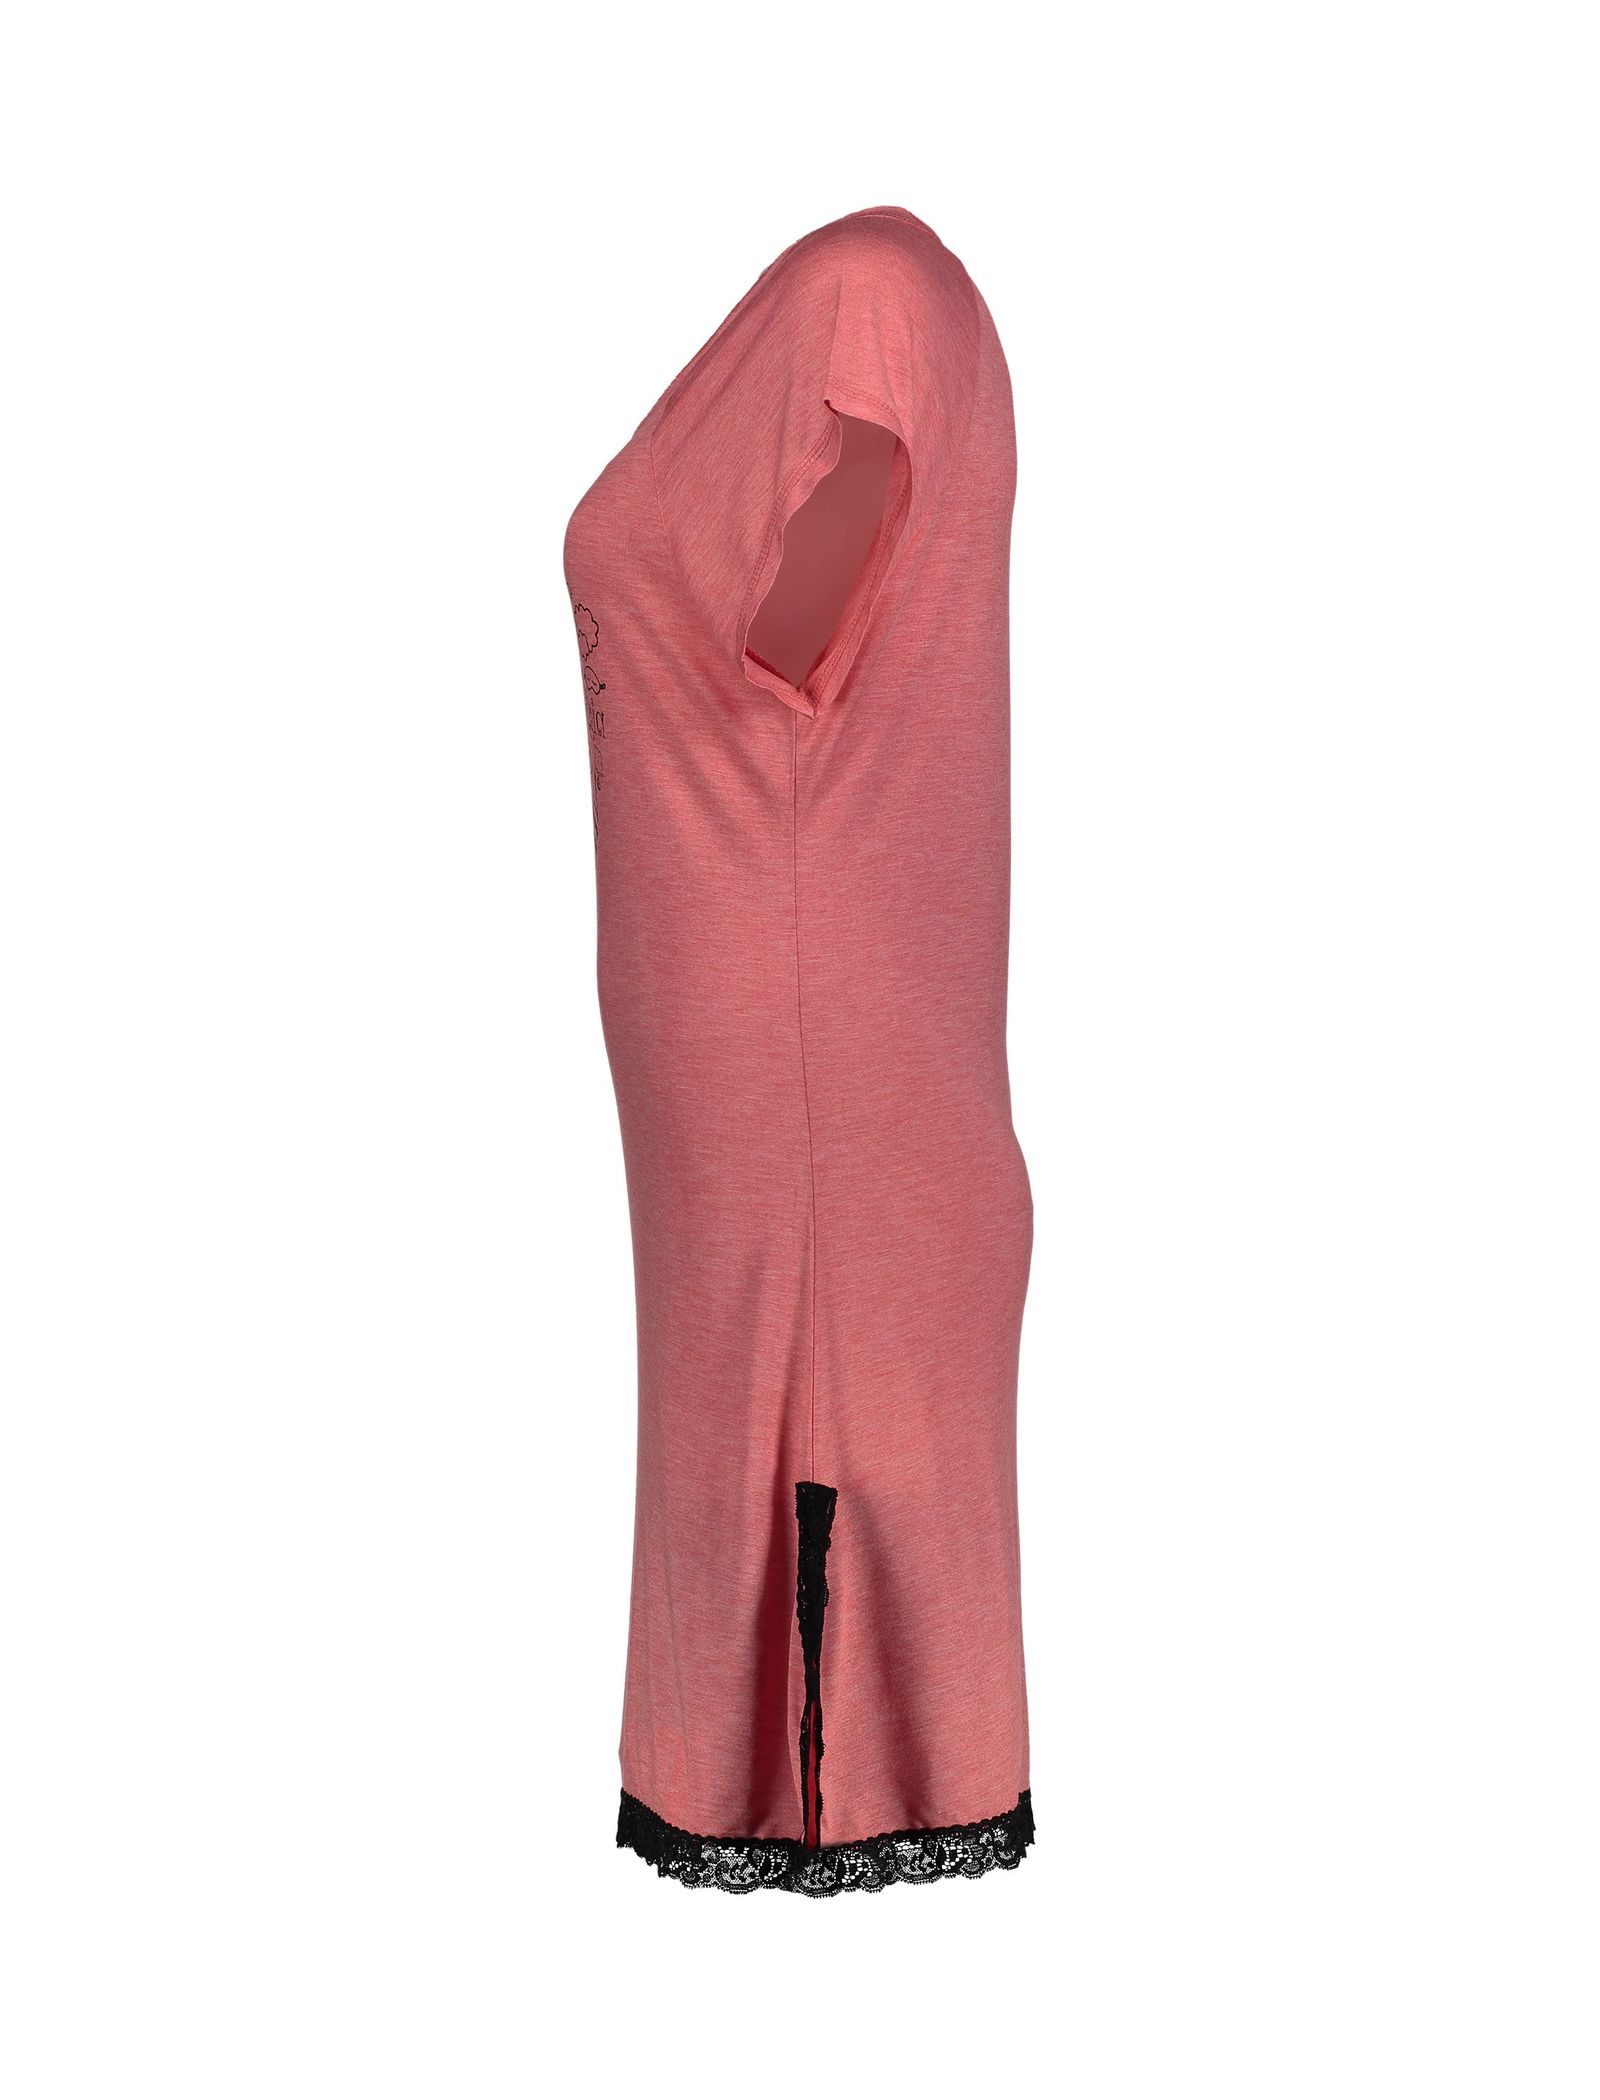 لباس خواب مودال زنانه - گارودی - قرمز صورتي ملانژ - 4